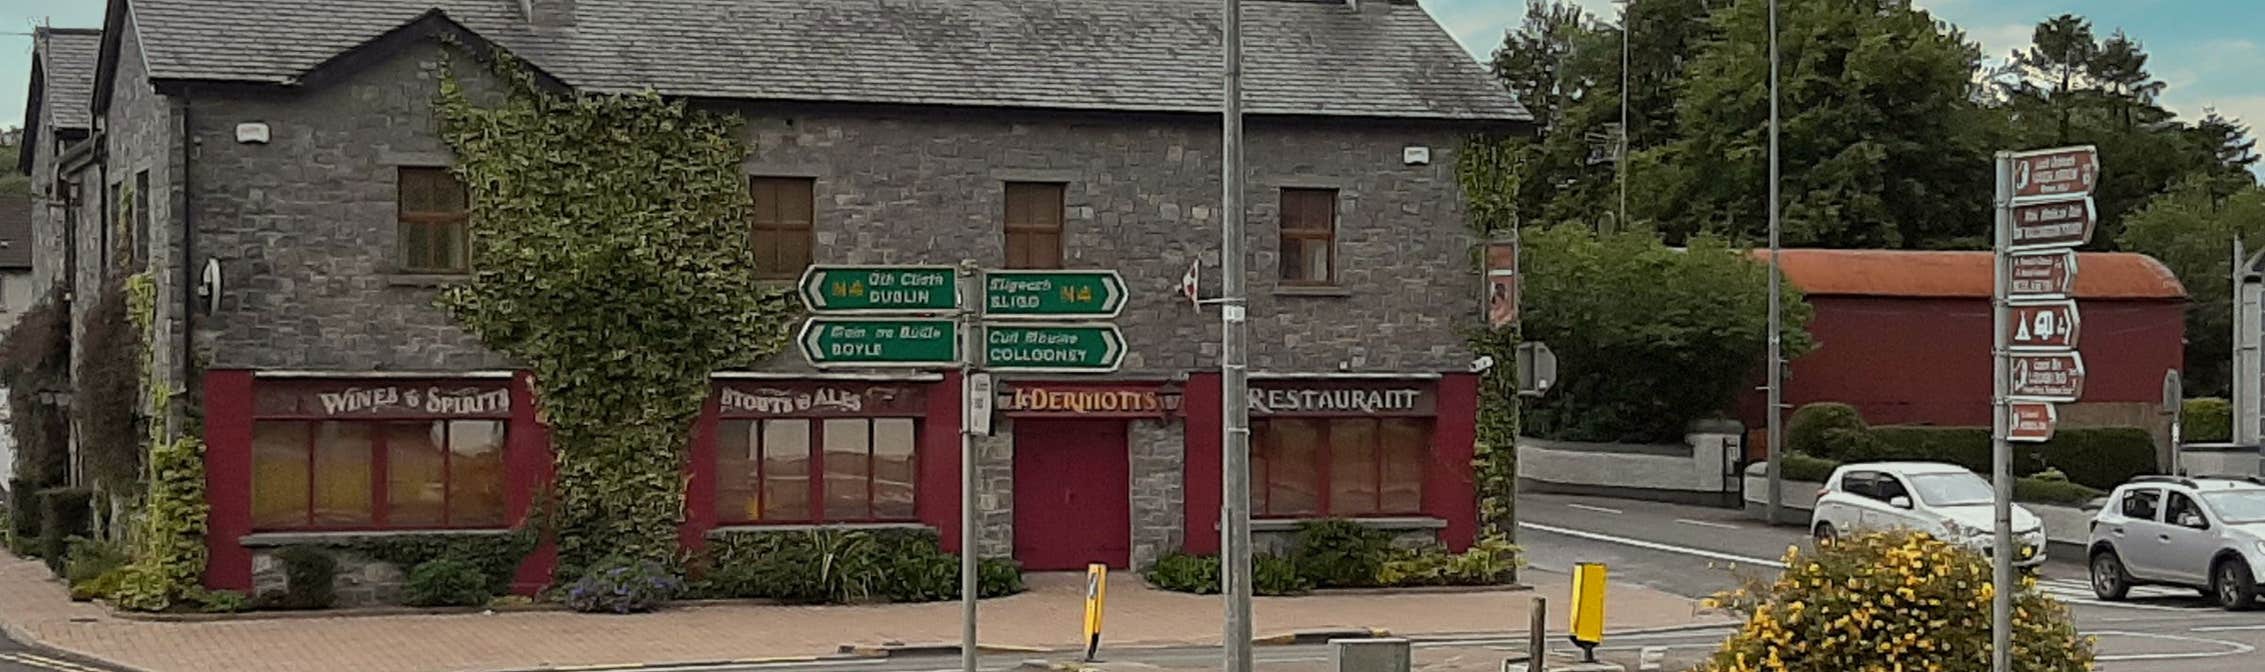 Image of Castlebaldwin town in County Sligo